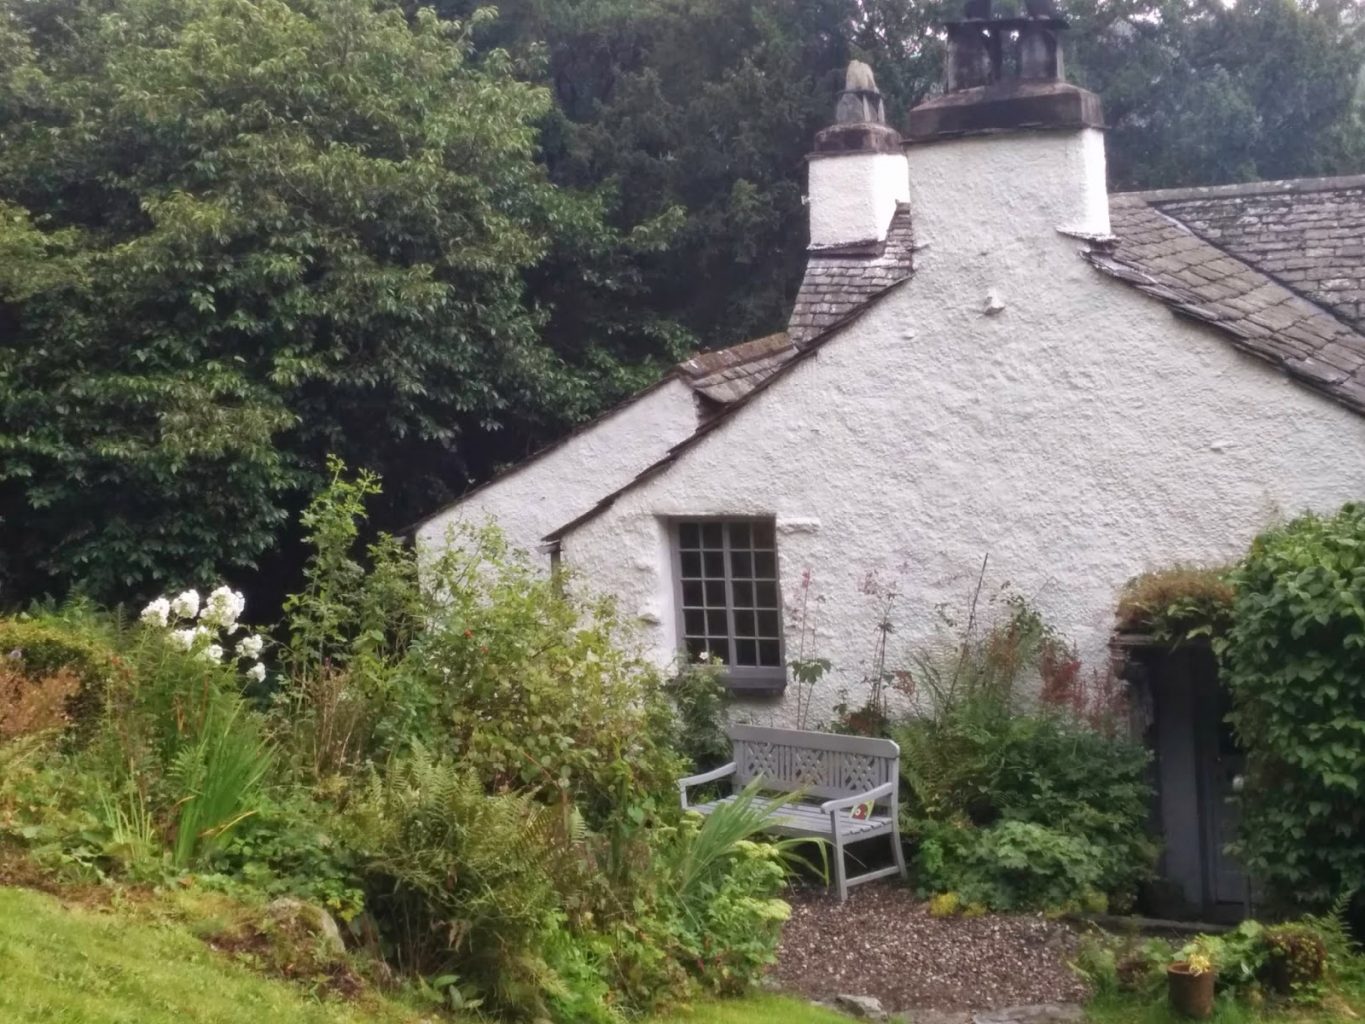 Wordsworth's garden of Dove Cottage